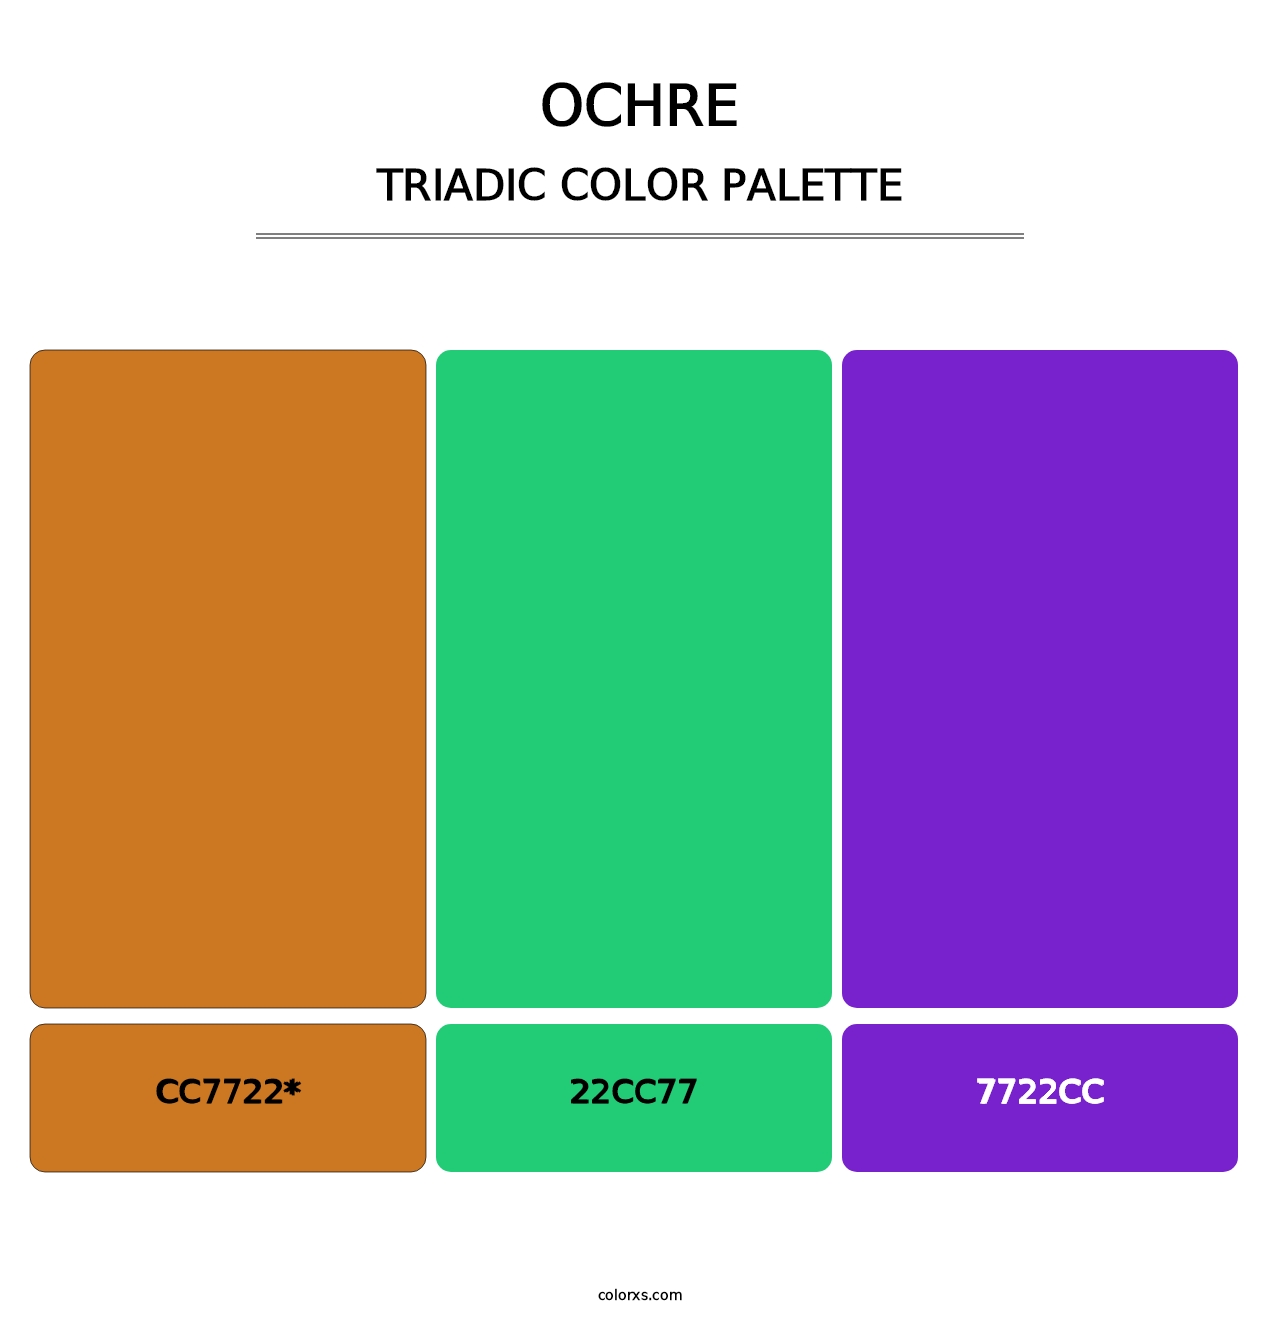 Ochre - Triadic Color Palette